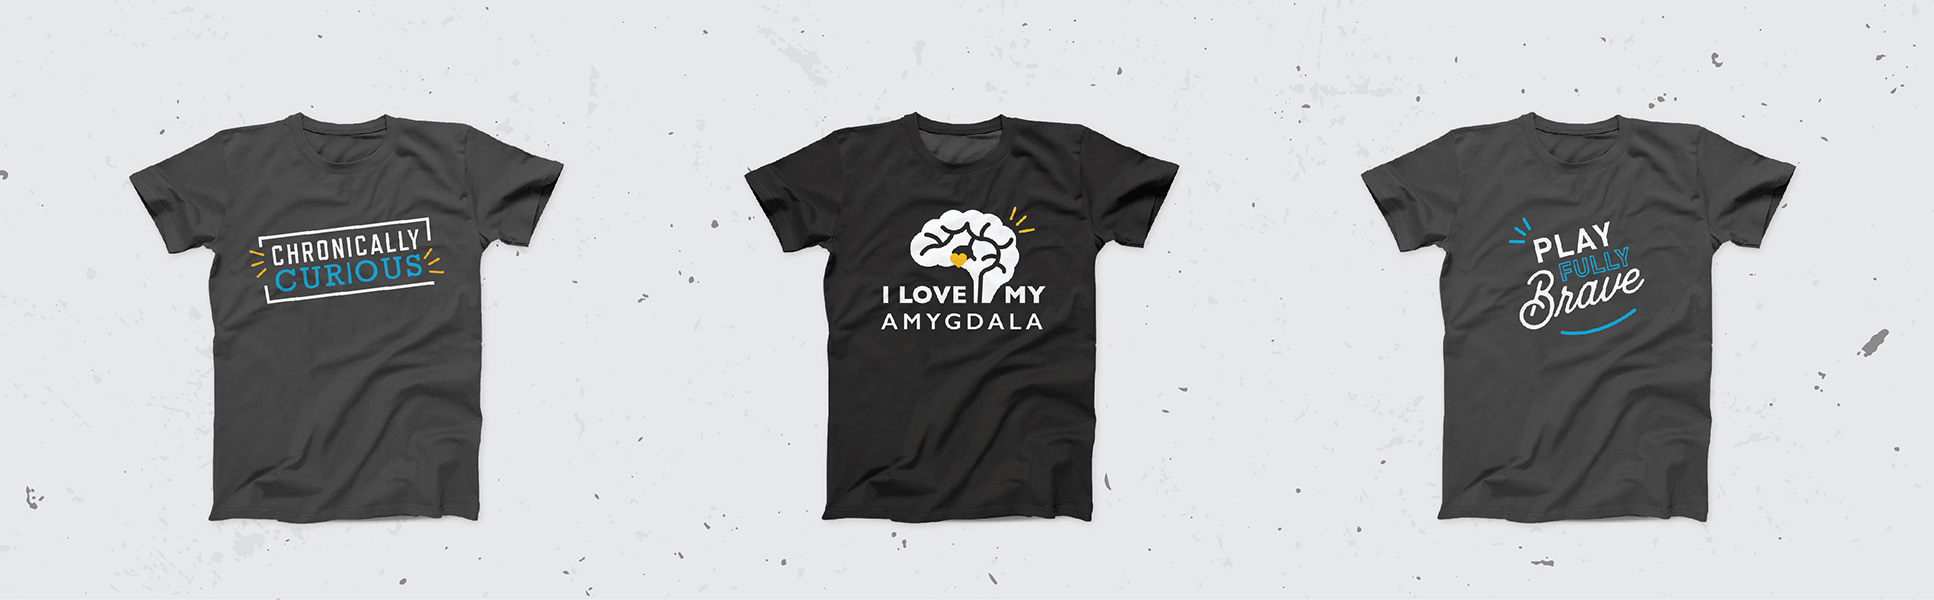 Three branded Sarah Noll Wilson T-shirts reading "Chronically Curious," "I Love My Amygdala" and "Play Fully Brave"